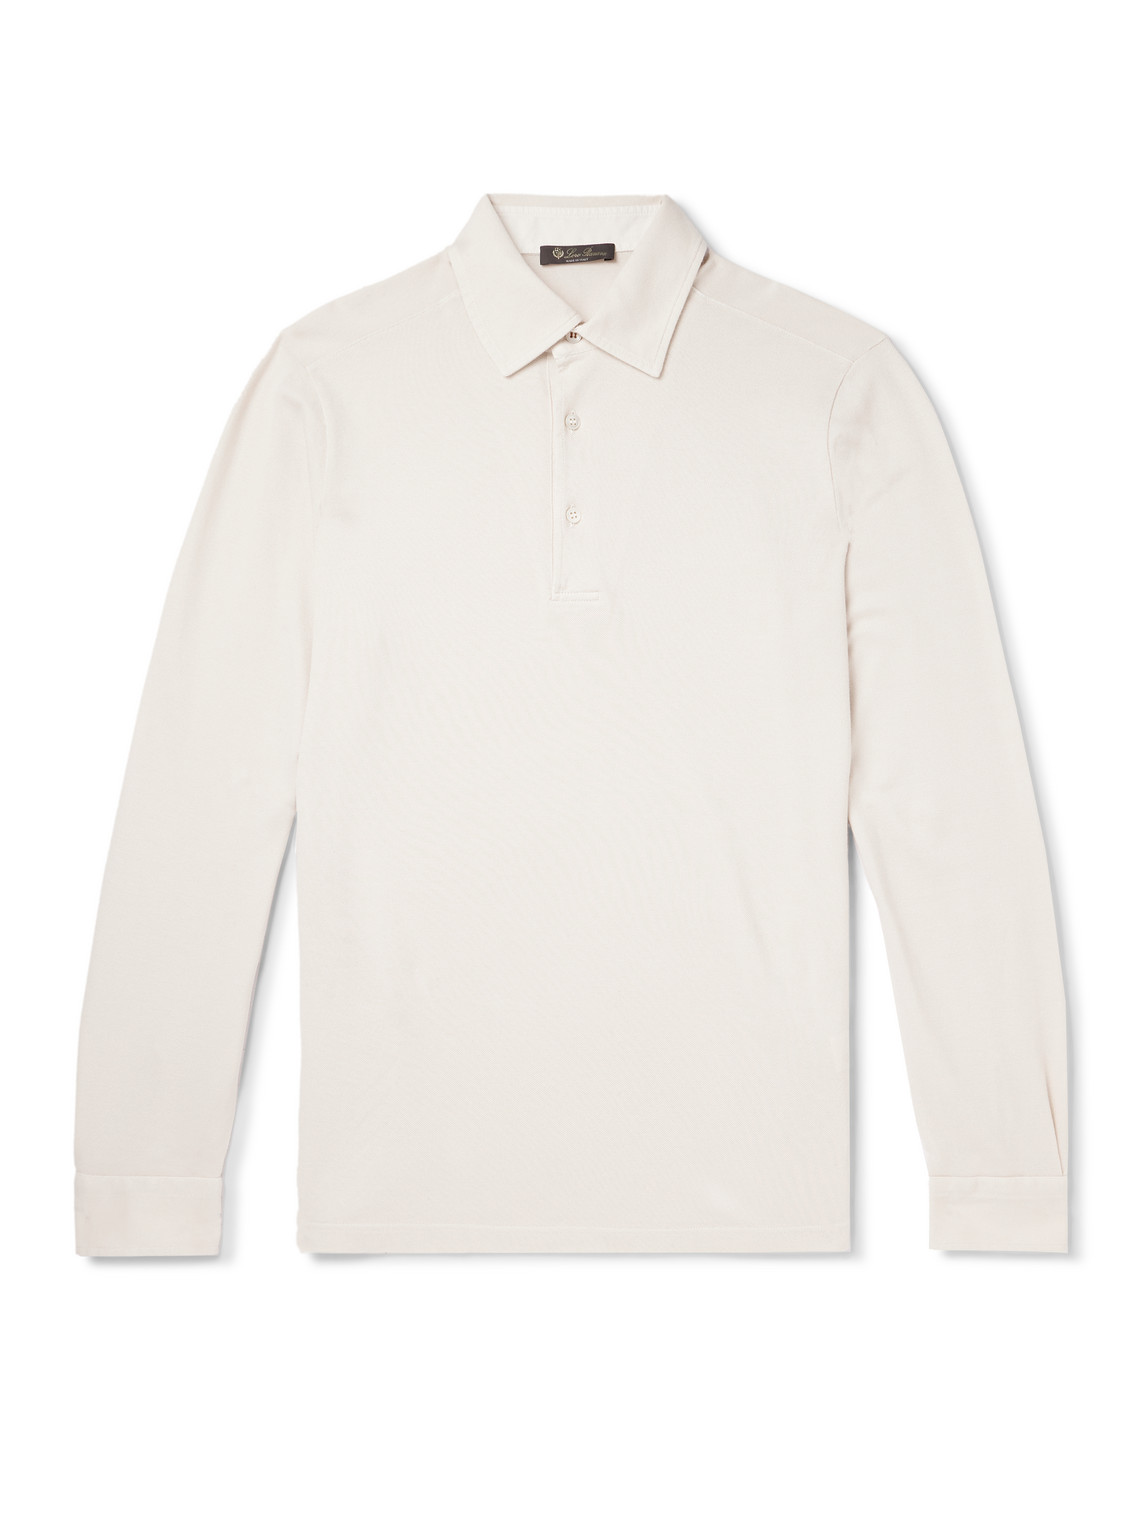 Loro Piana - Cotton-Piqué Polo Shirt - Men - White - S von Loro Piana